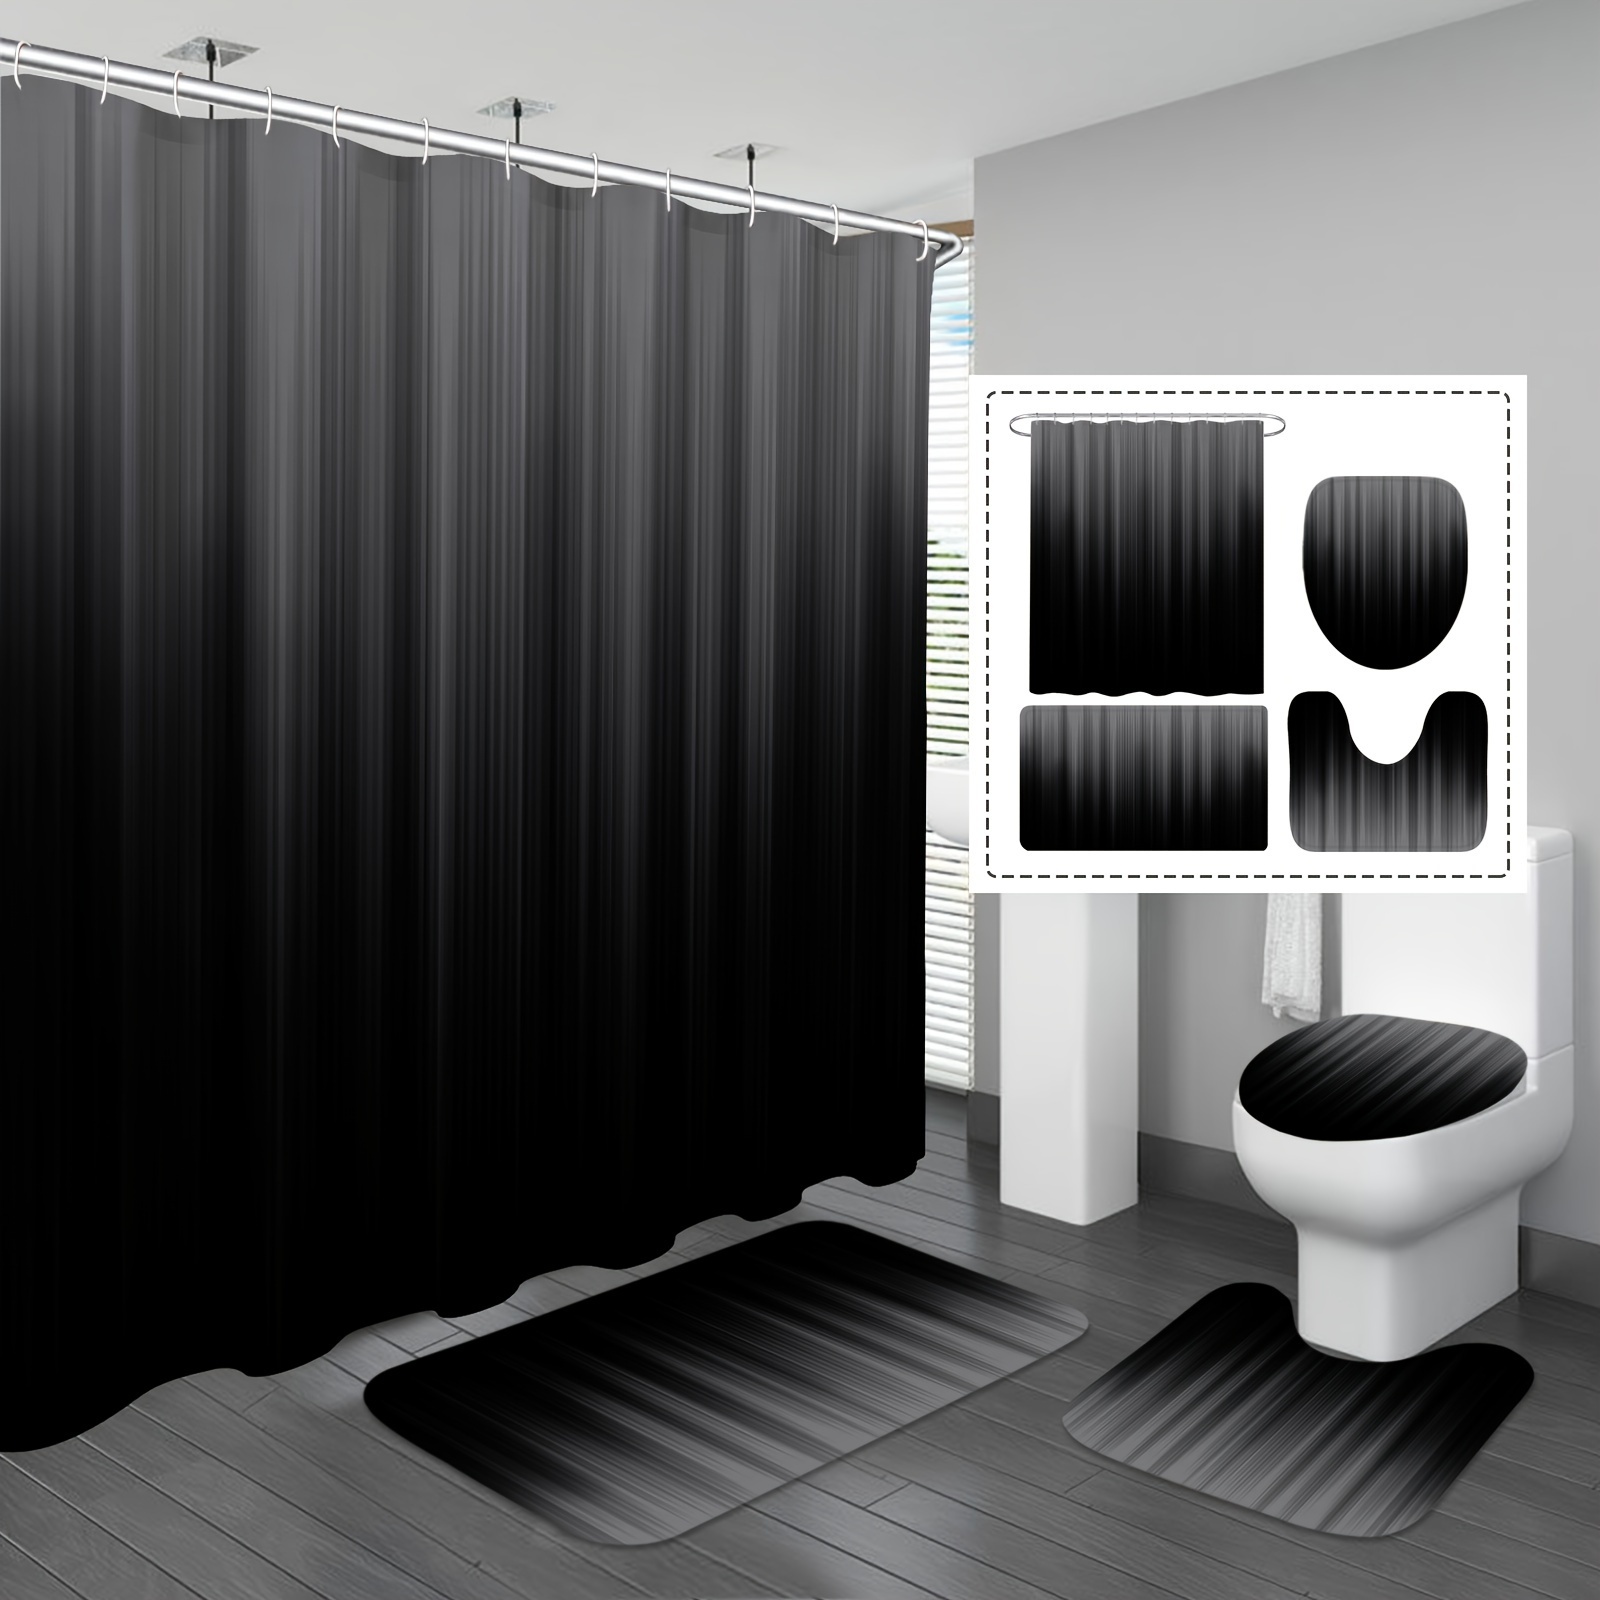 Forro para cortina ducha baño 8G 72 x 72 transparente resistente agua